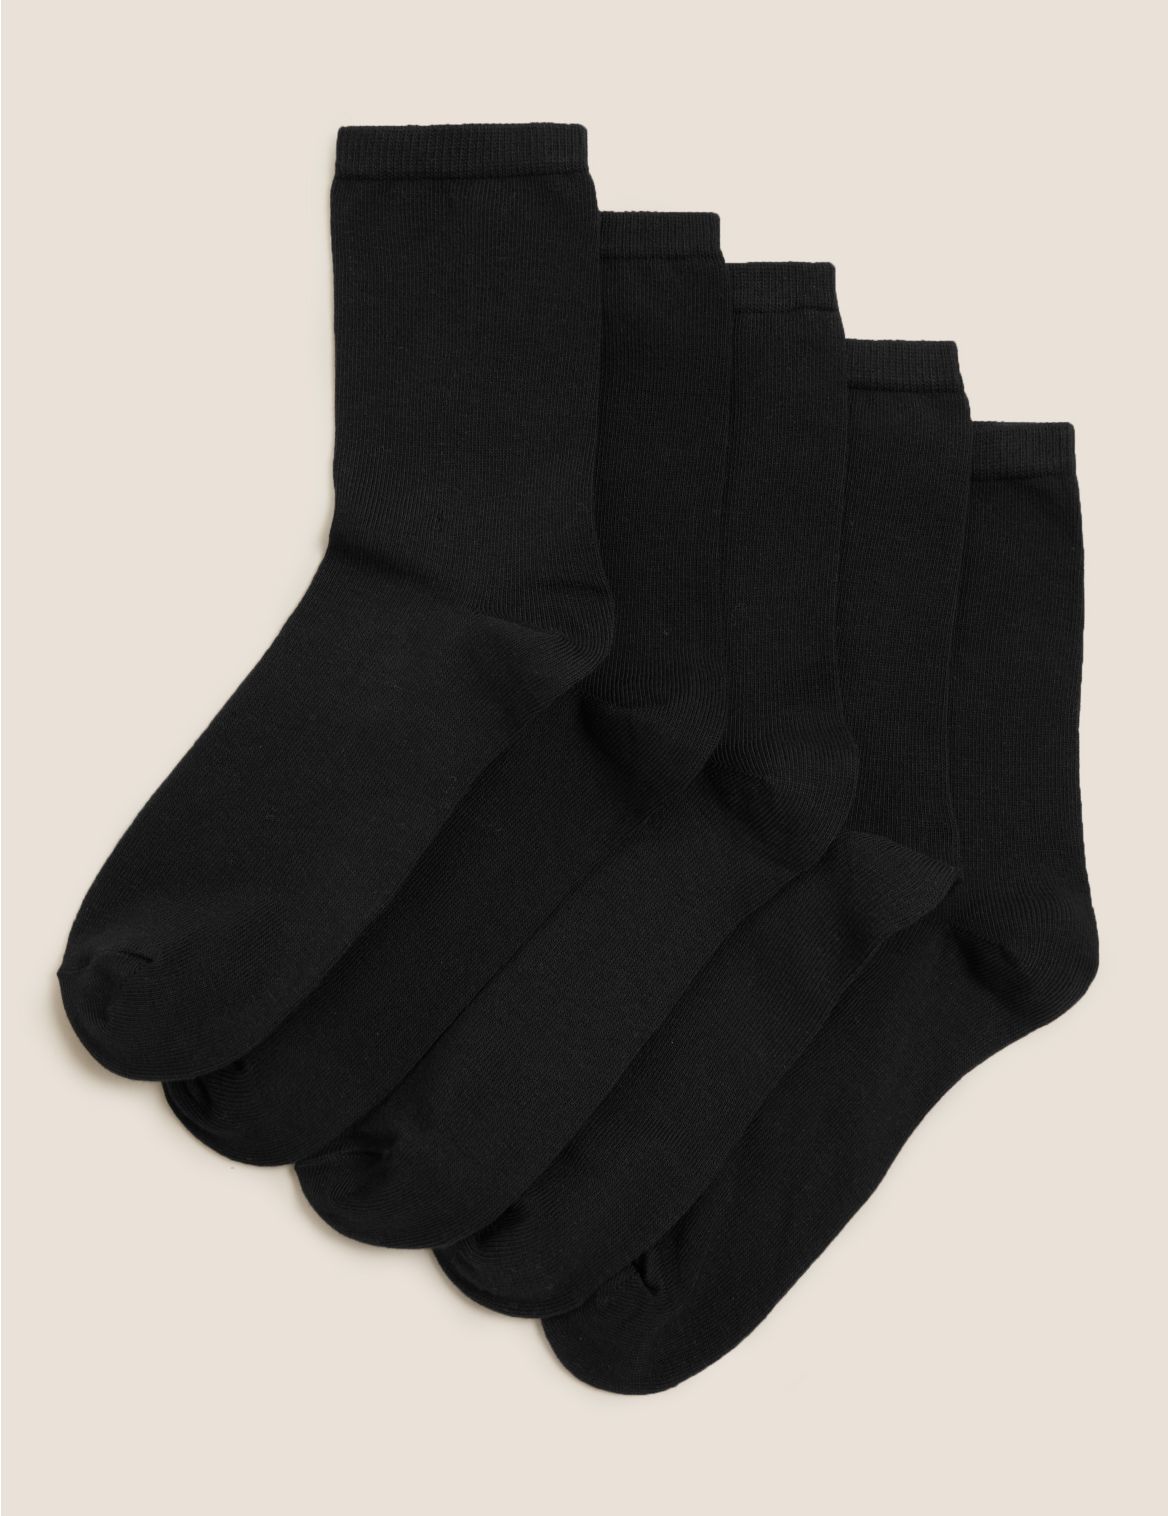 5 Pack Cotton Ankle High Socks black